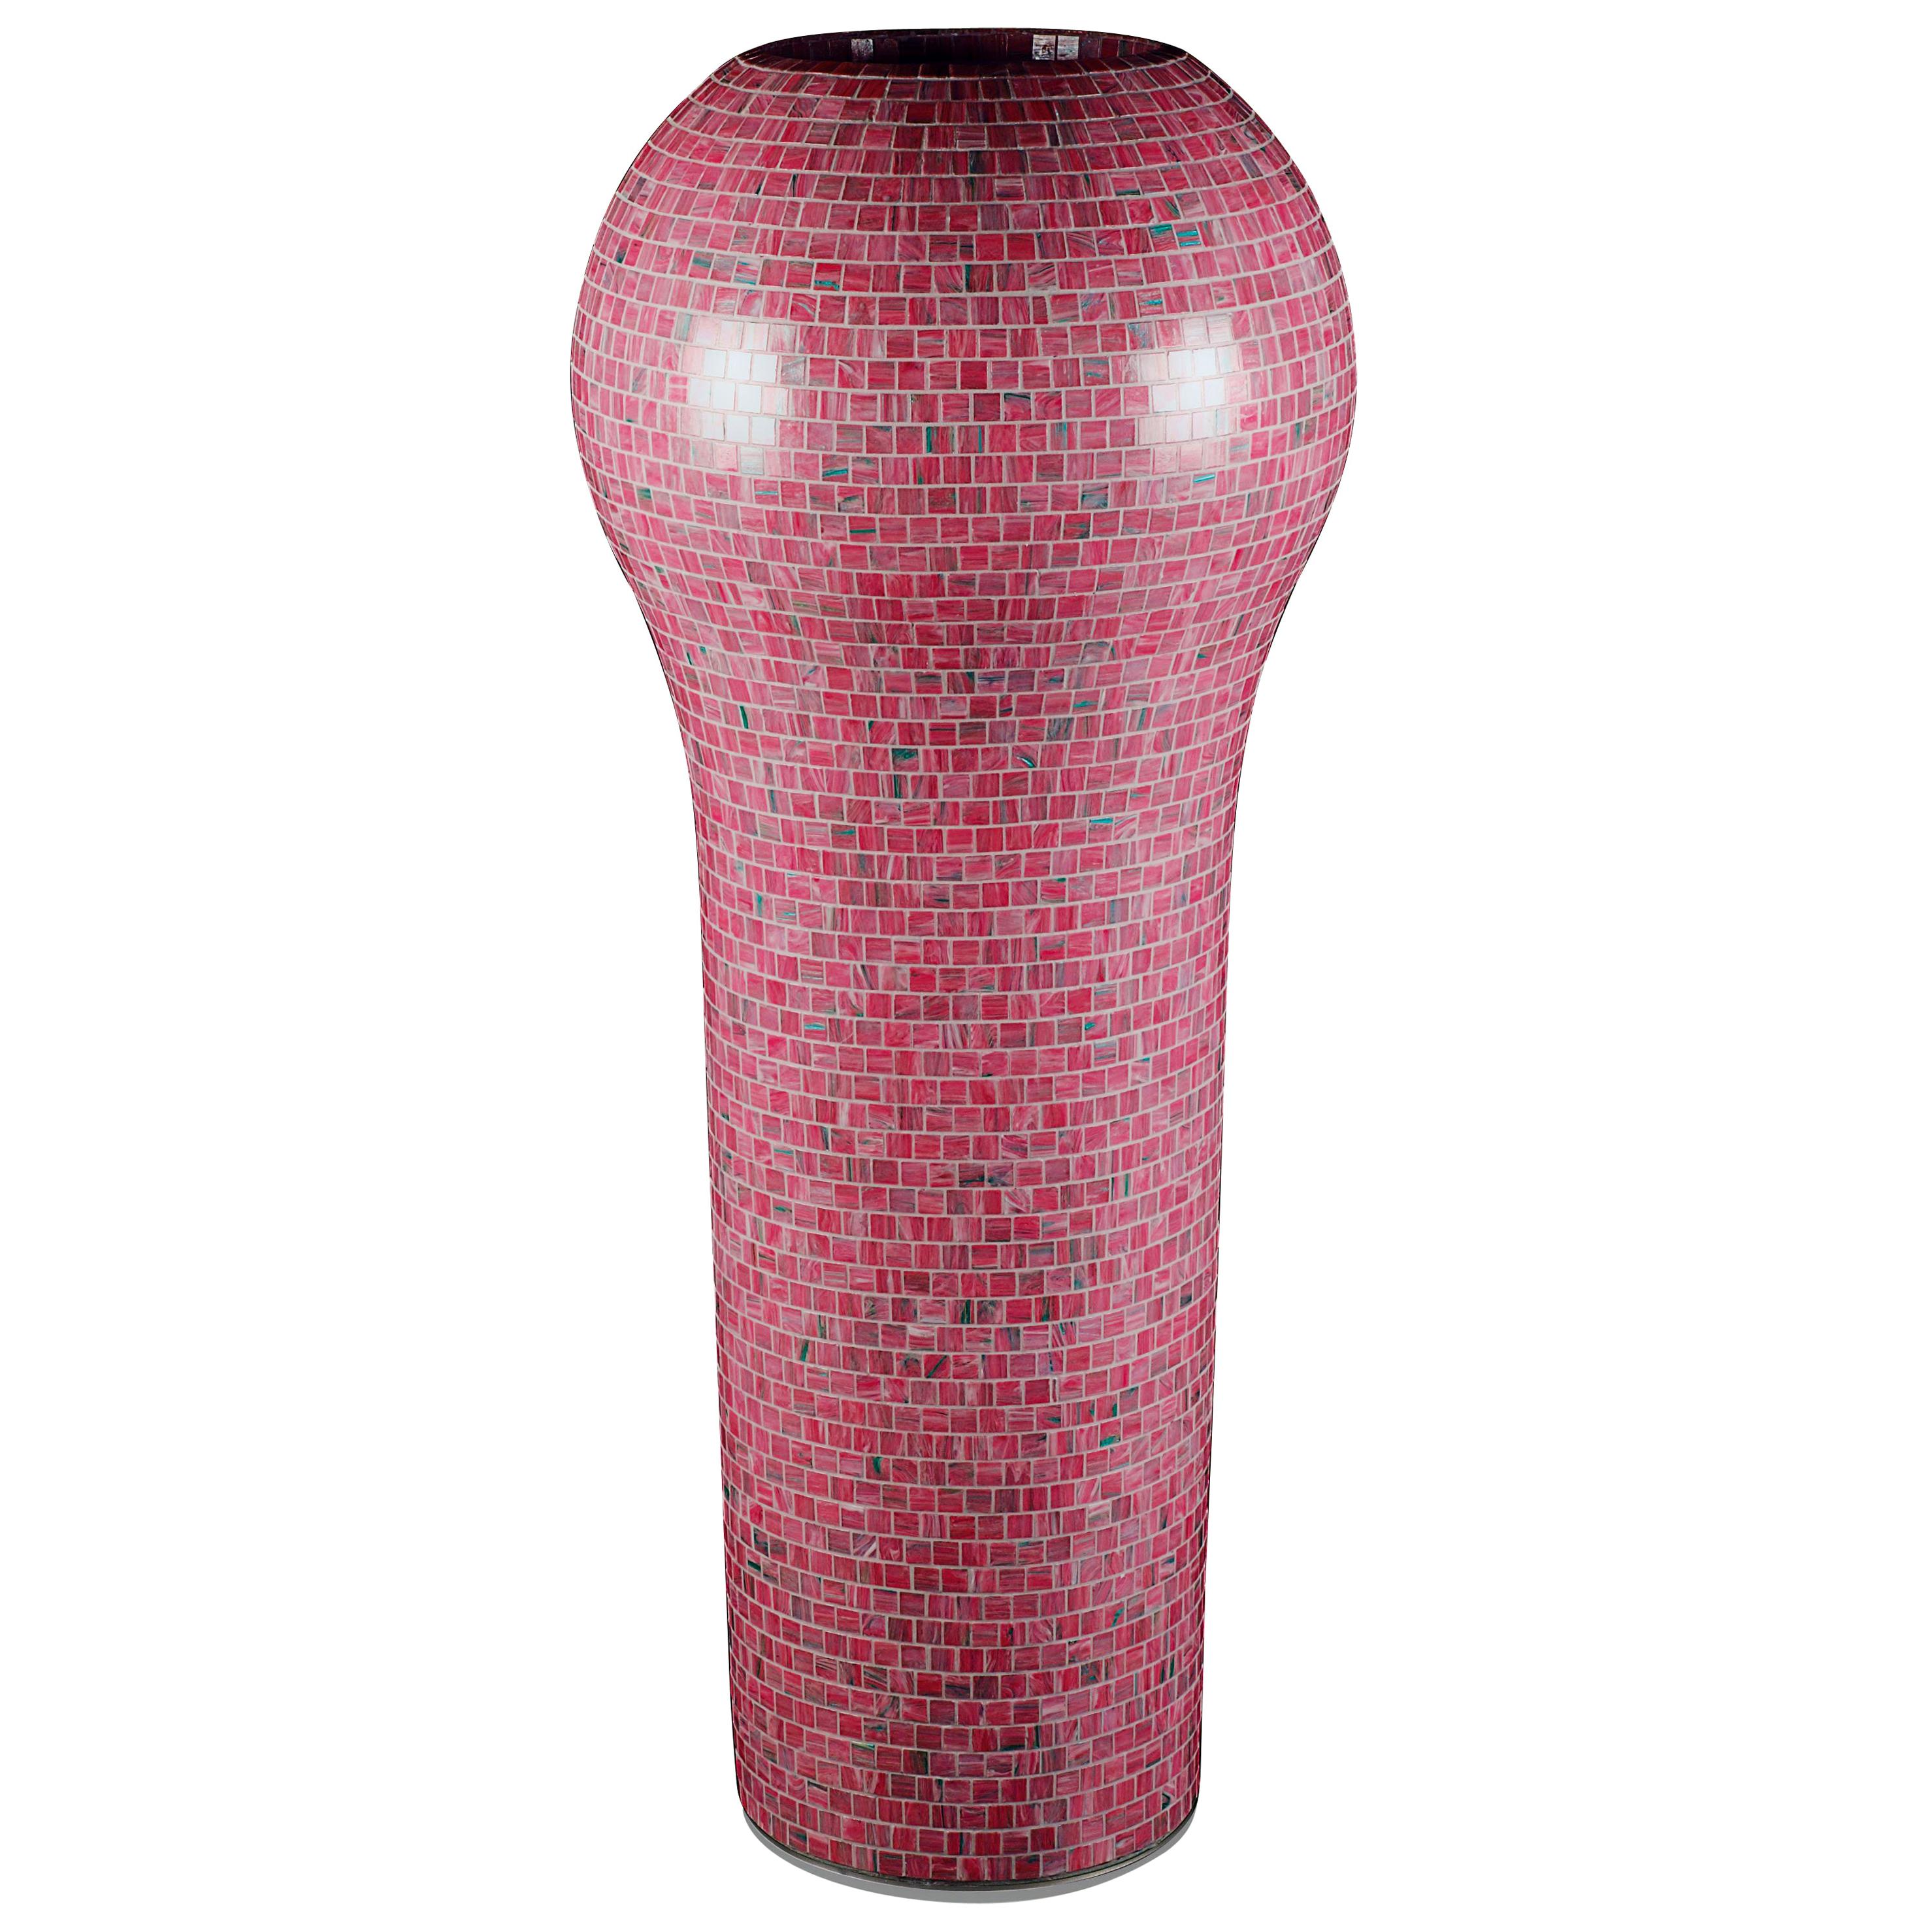 Sakata Vase, LDPE, Indoor, Bisazza Mosaic, Italy For Sale